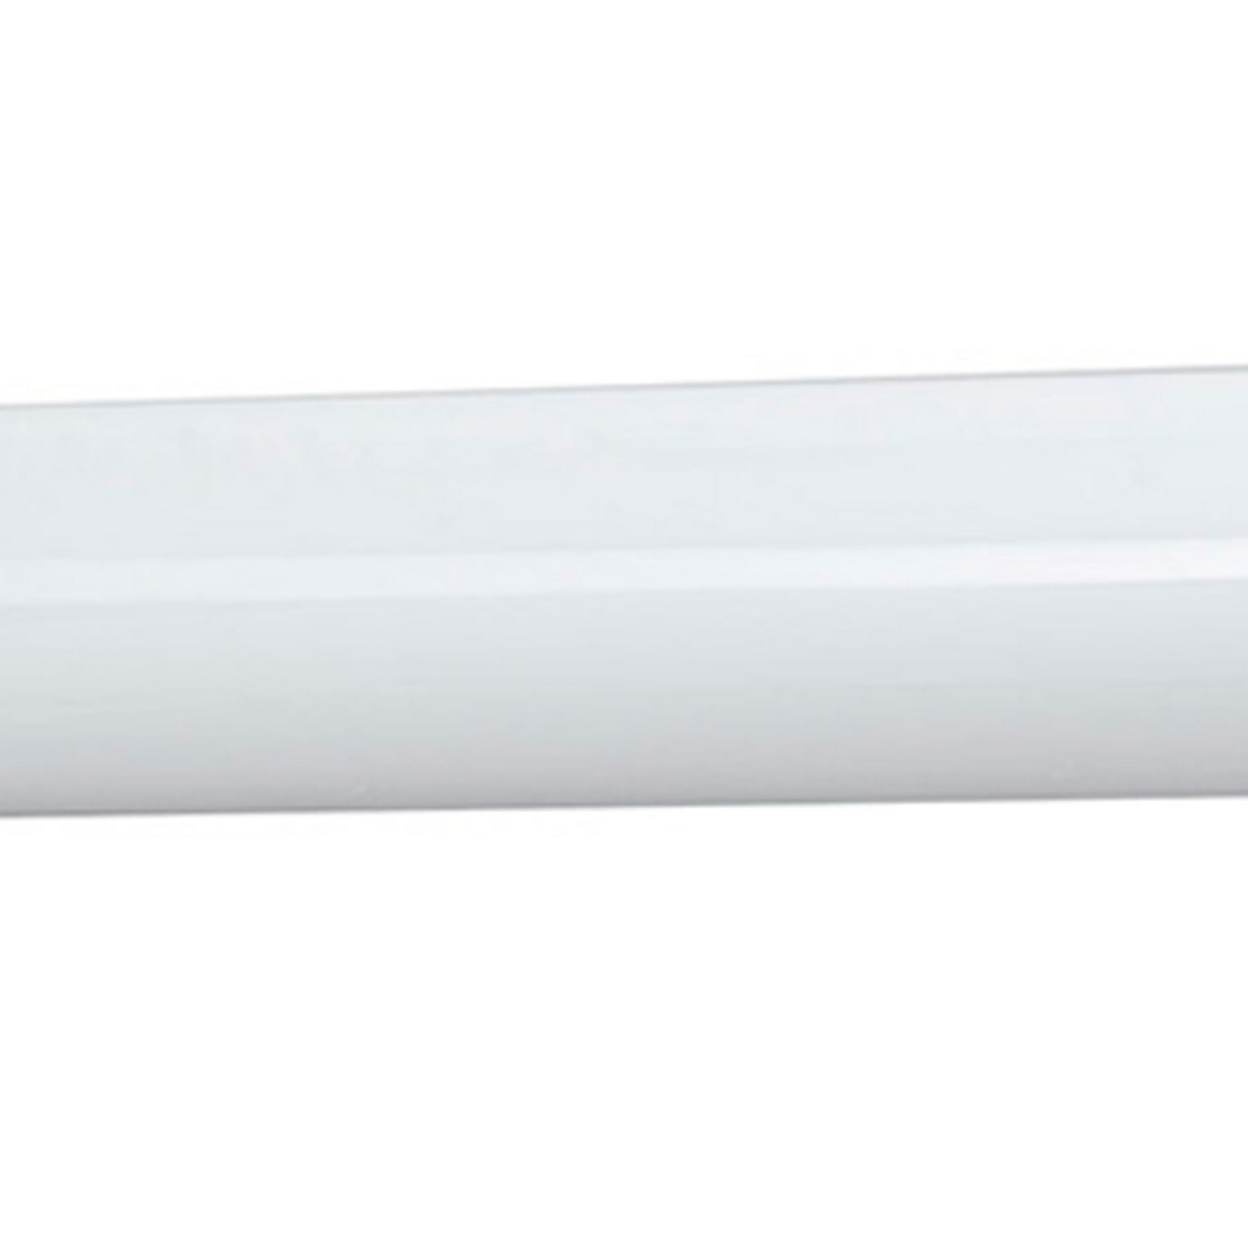 Pipe Design Metal Vanity Light With Hardwired Switch, Set Of 4, Large,White- Saltoro Sherpi